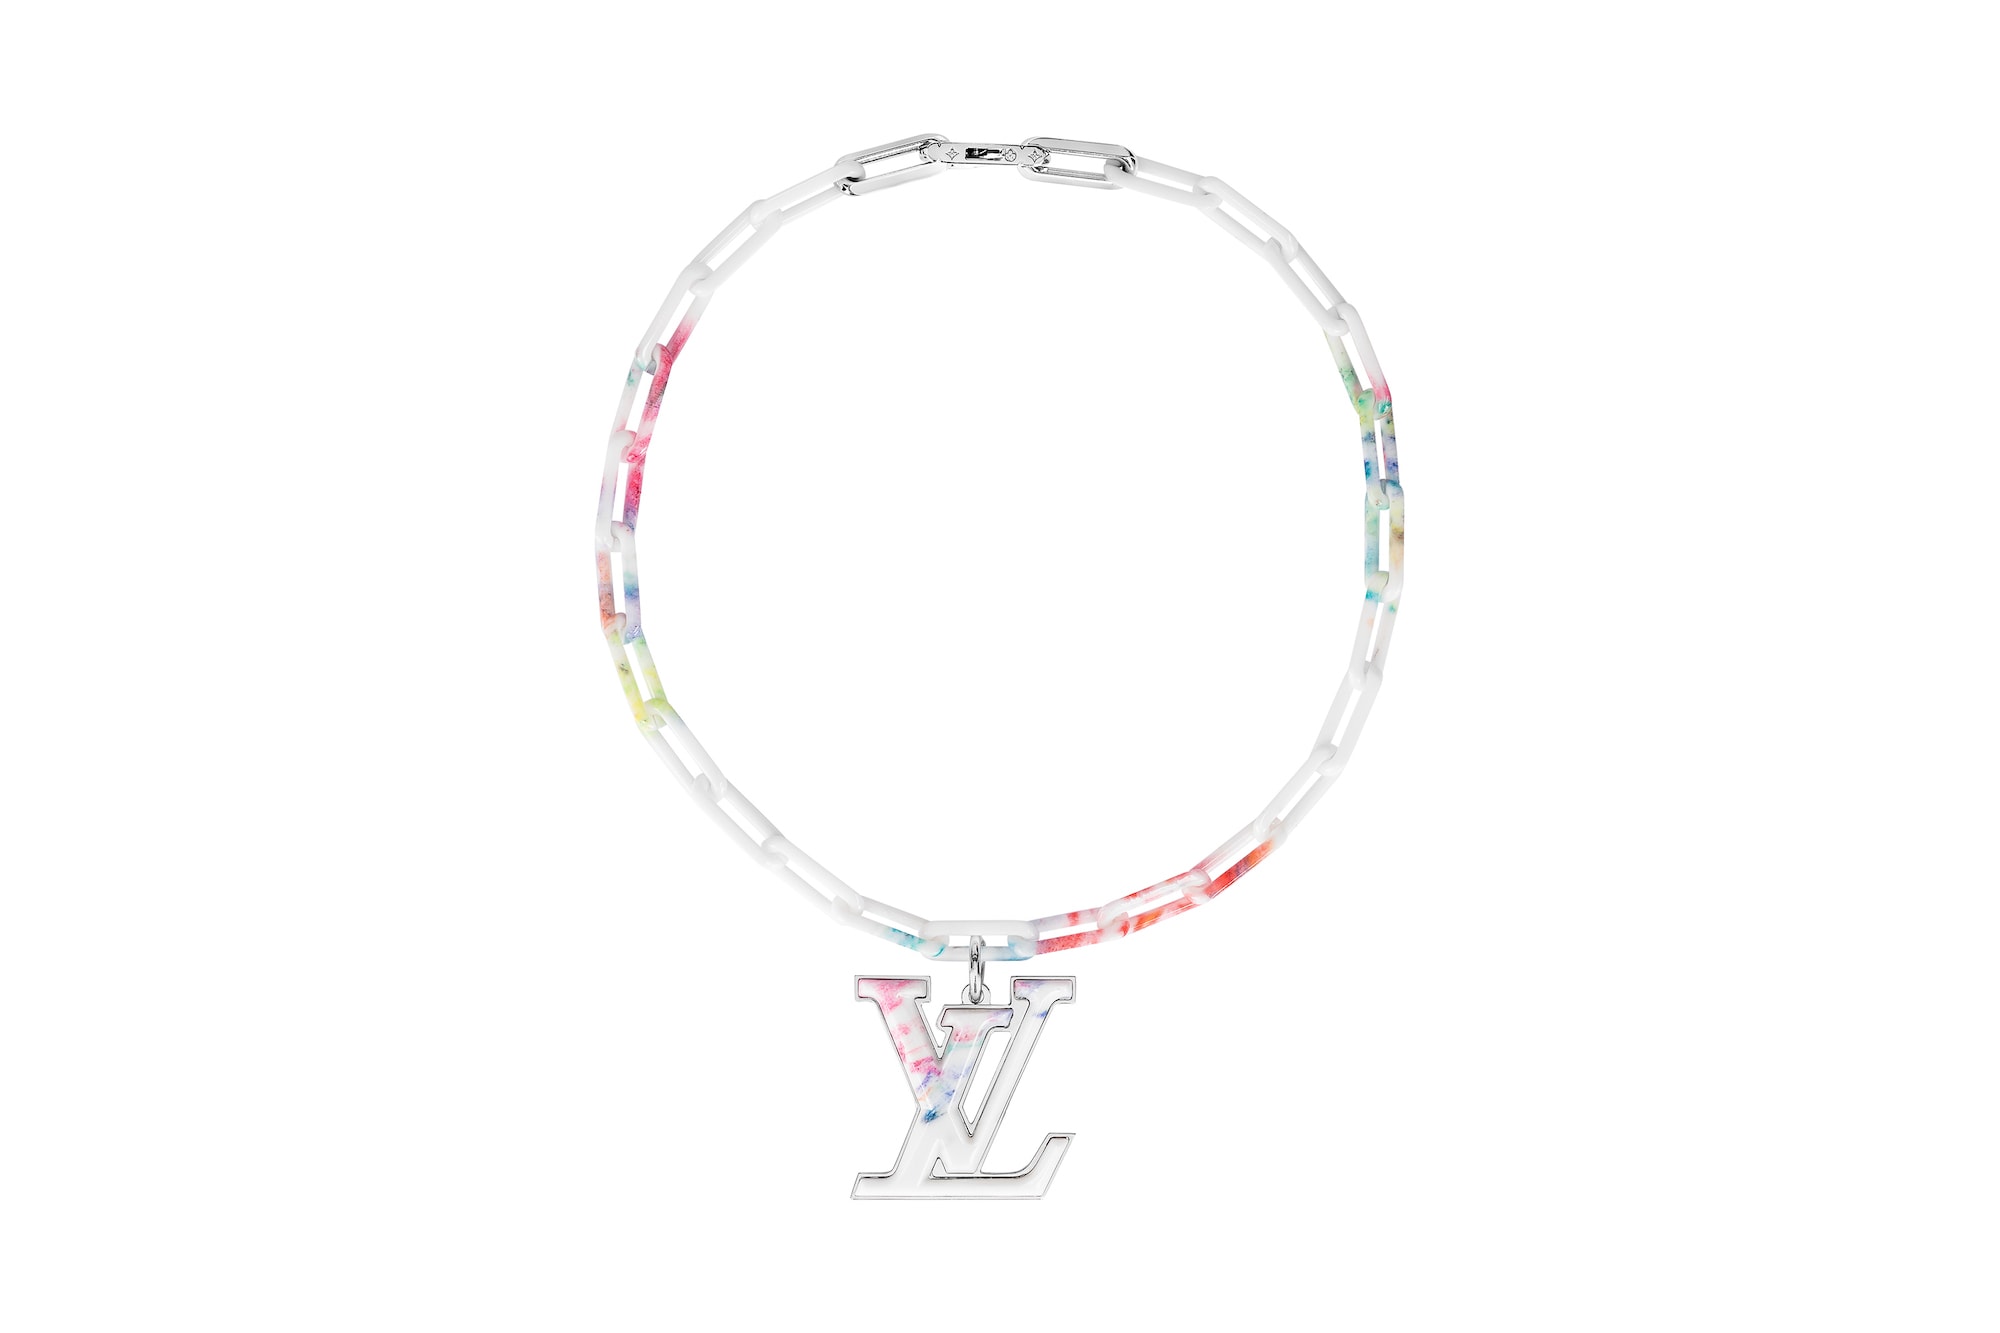 Louis Vuitton Pre-Spring 2021 Drop 2 Release Accessories Where to Buy Virgil Abloh Rainbow Pastel Monogram Bags